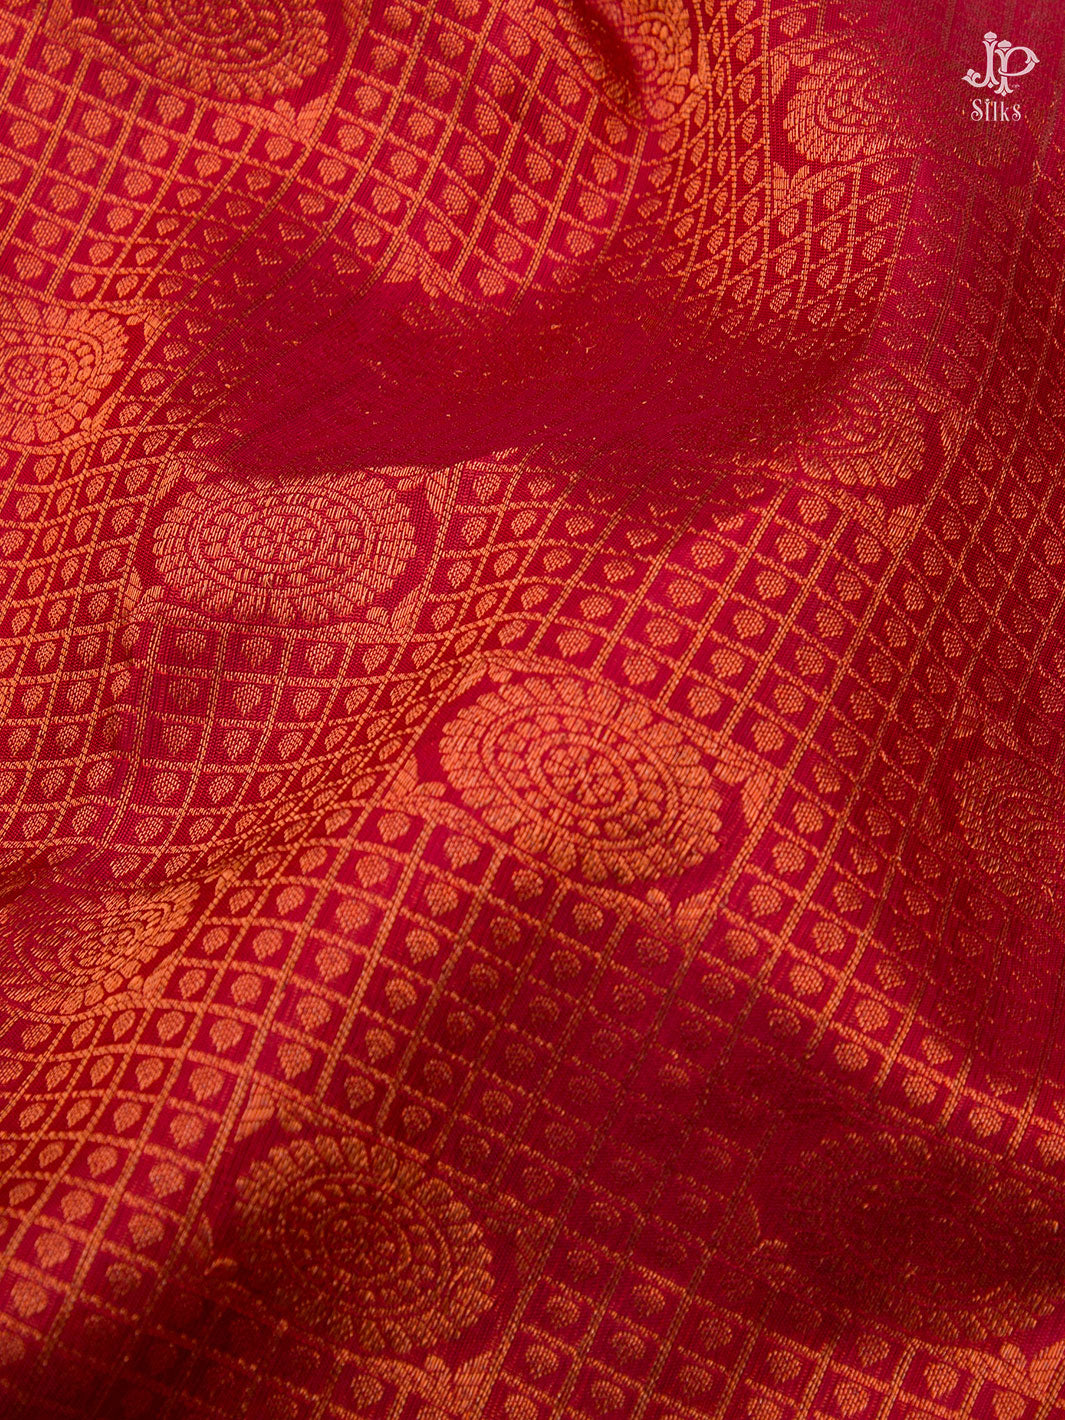 Reddish Maroon Kanchipuram Silk Saree - E250 - View 3